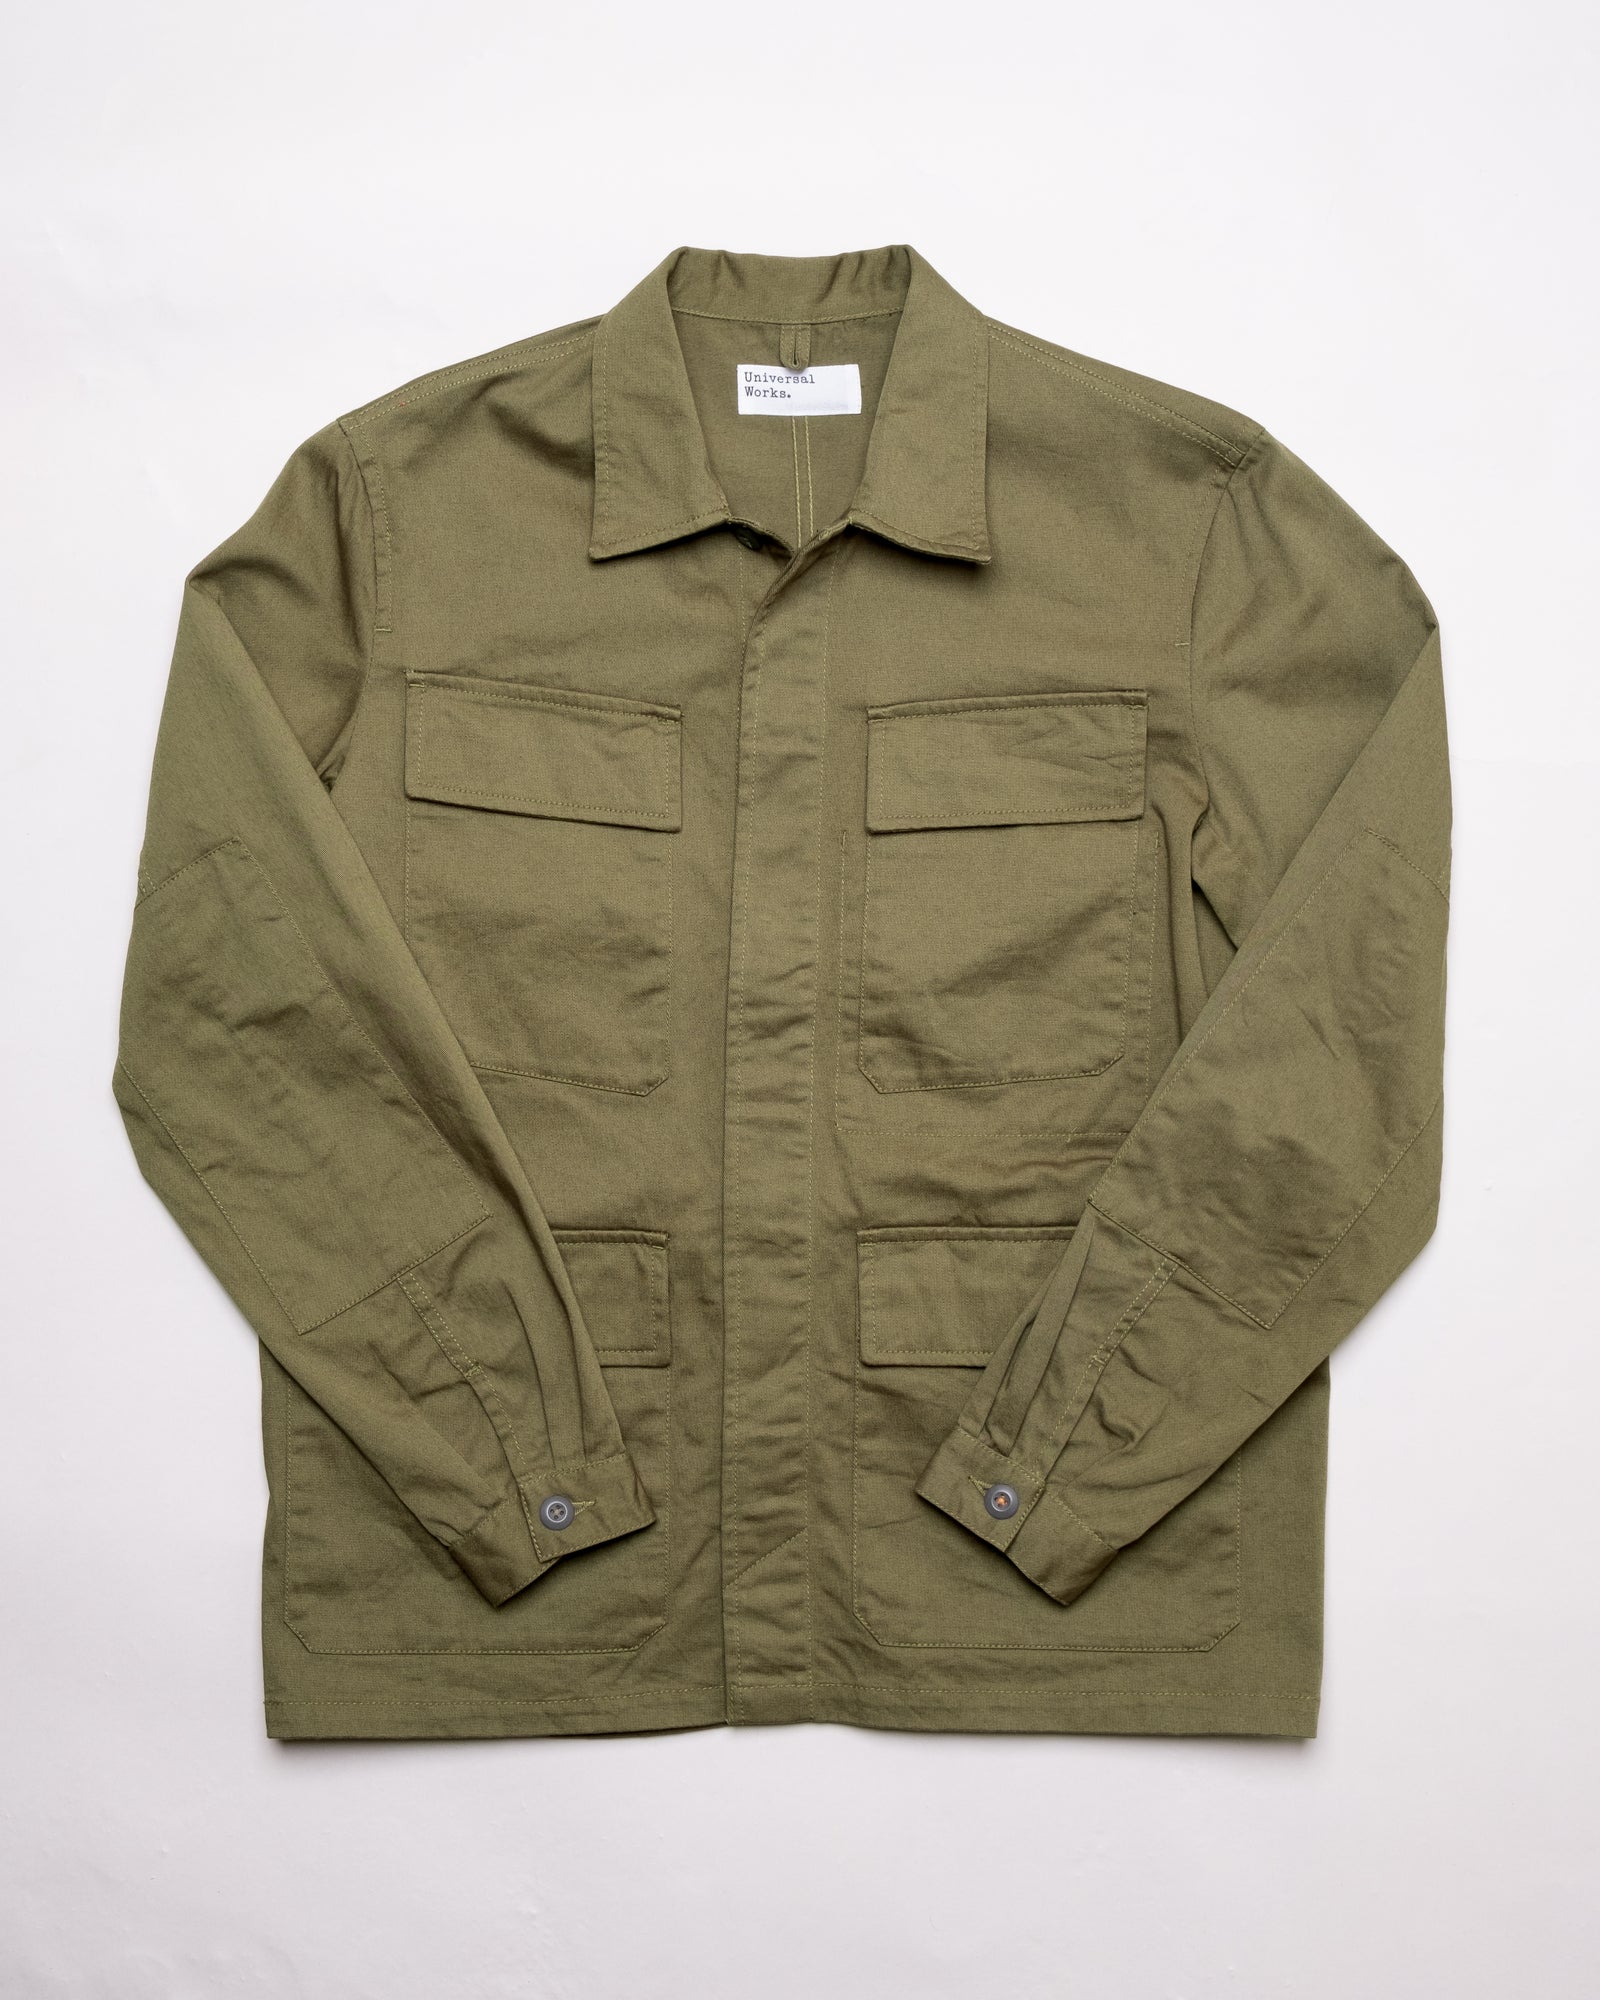 MW Fatigue Jacket in Light Olive – General Quarters